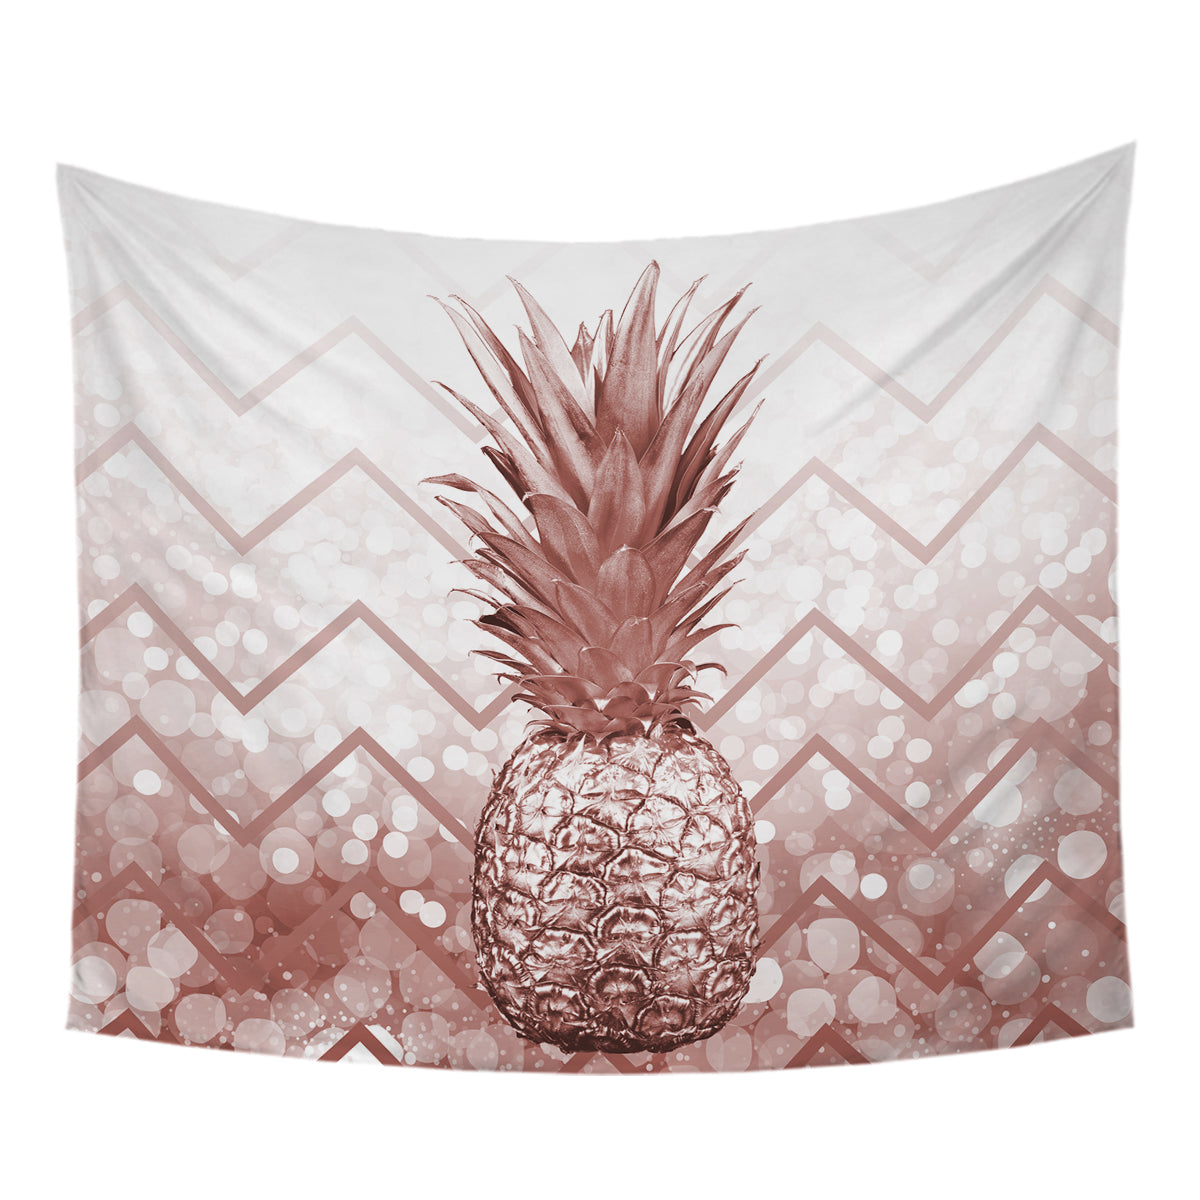 The Golden Pineapple Tapestry